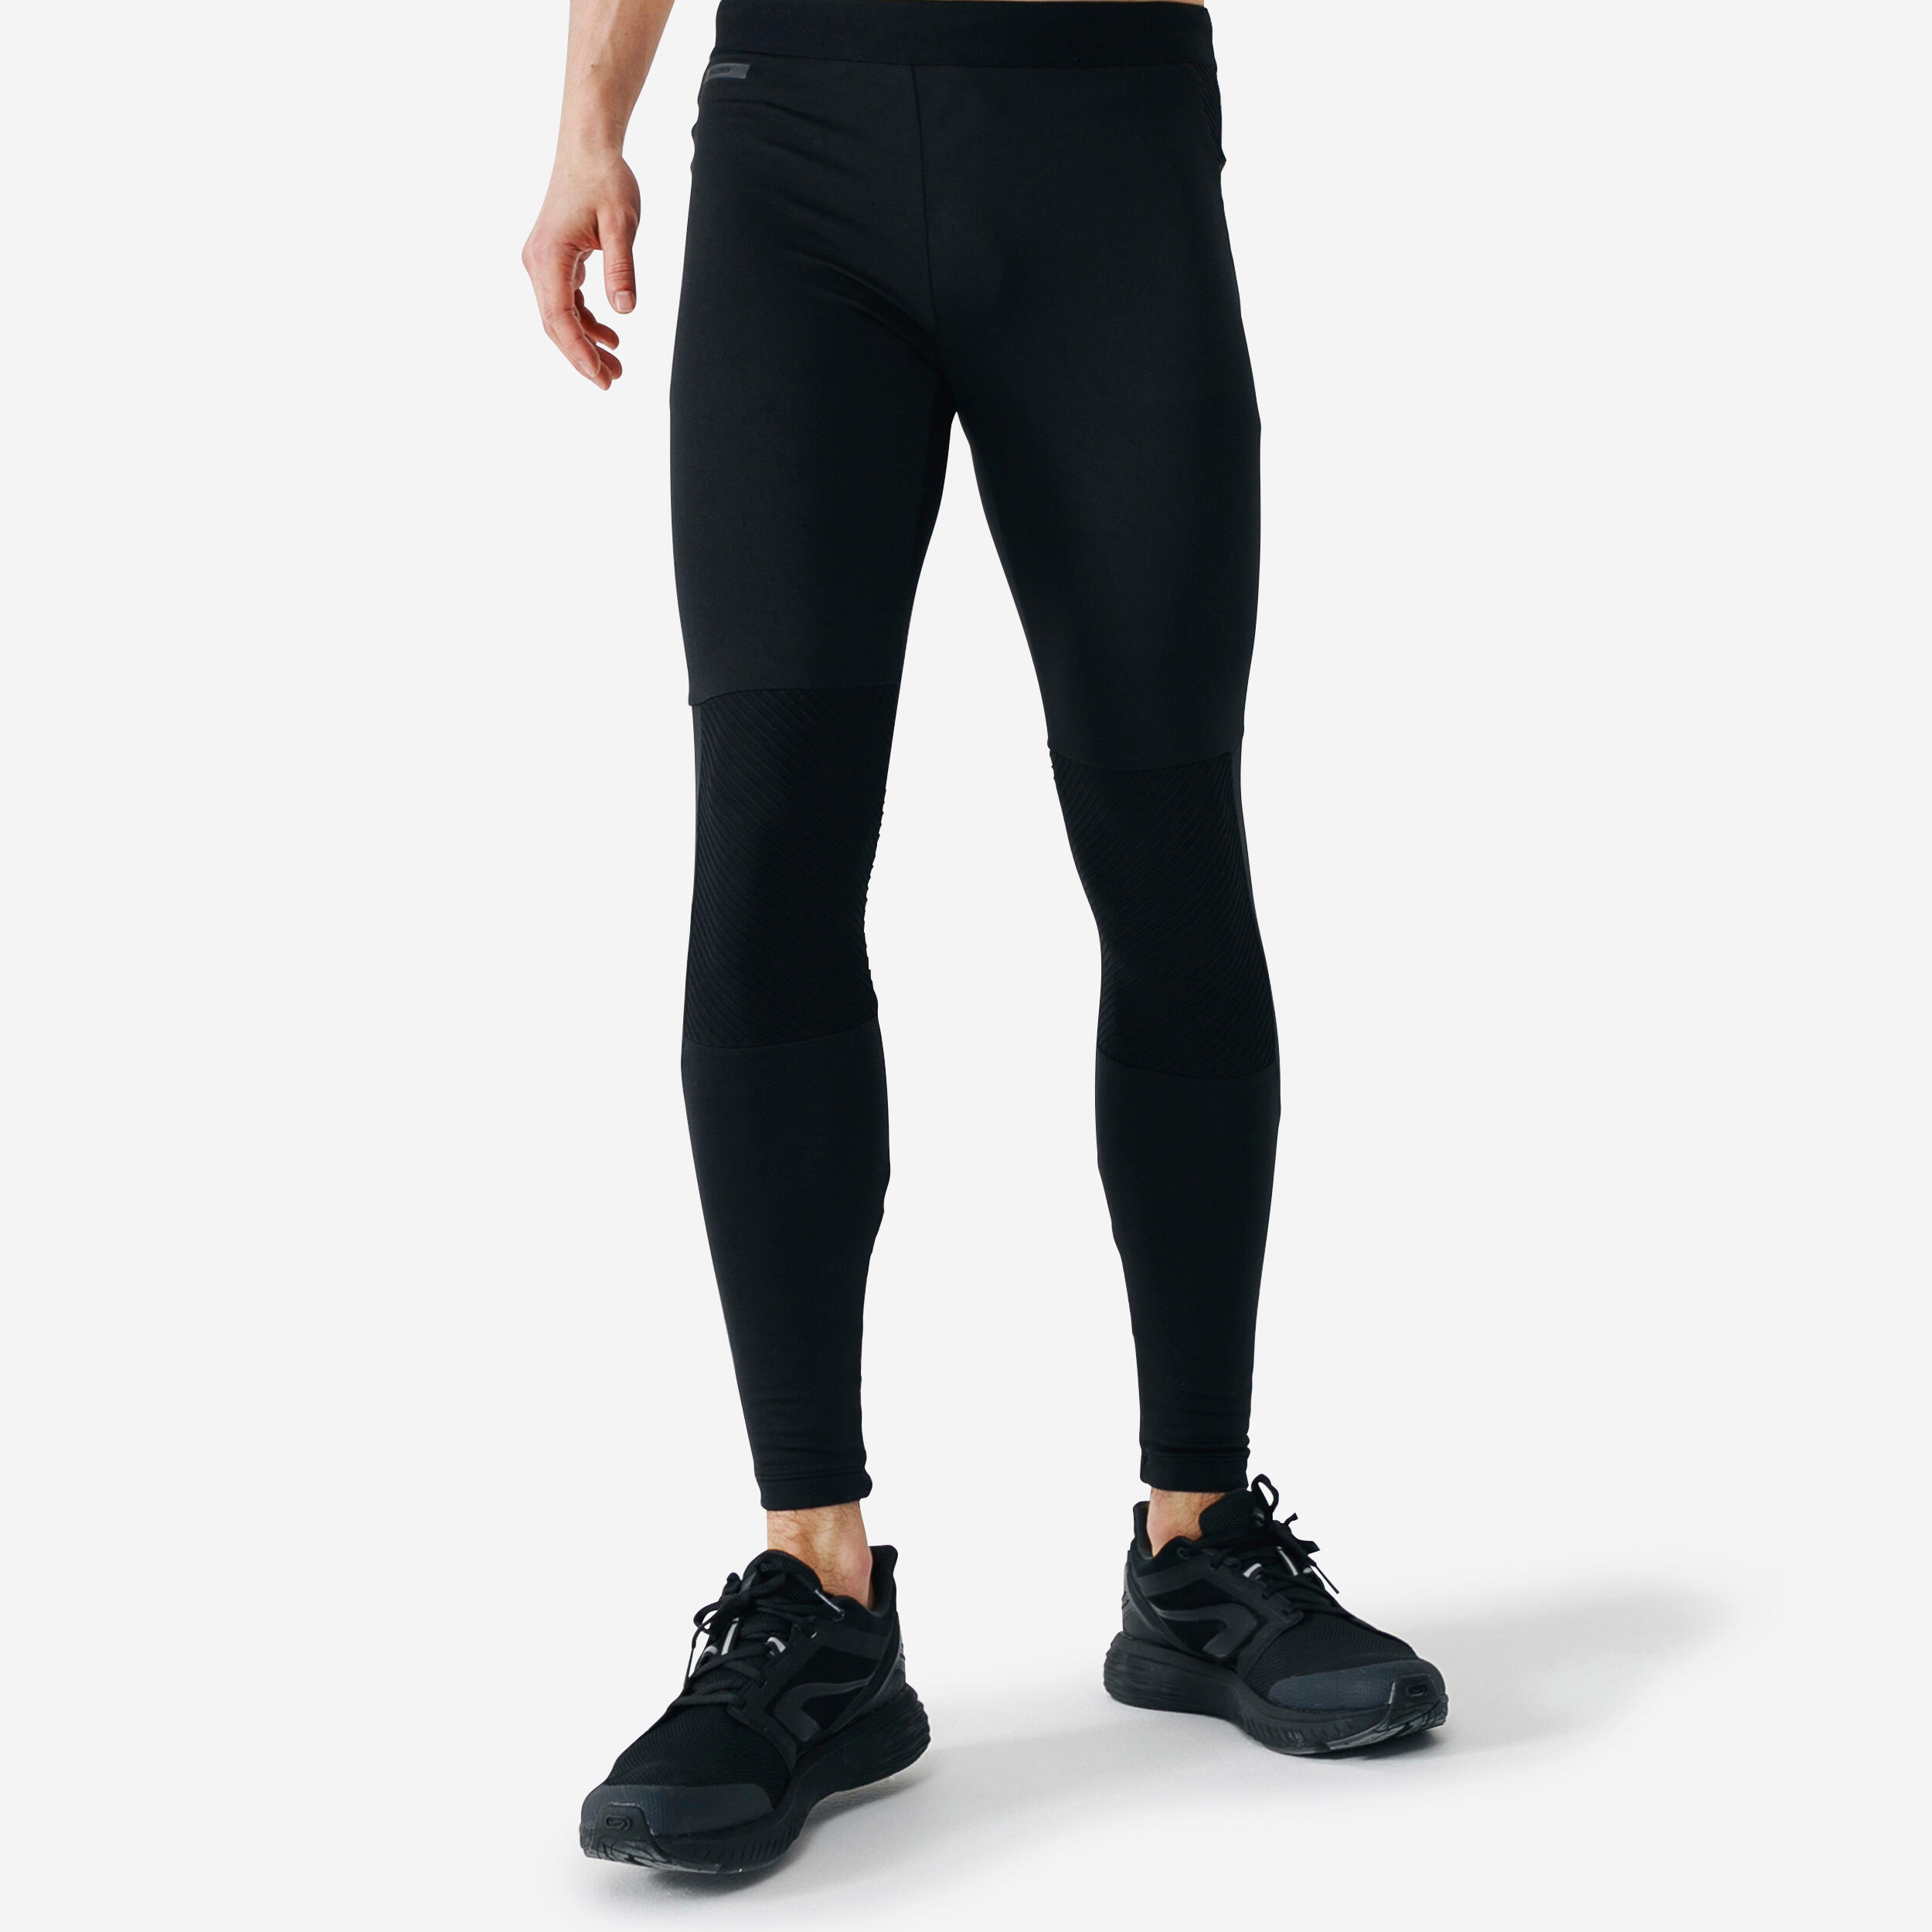 KALENJI Essential Men Running Tights by Decathlon-Black(XL) : :  Clothing & Accessories